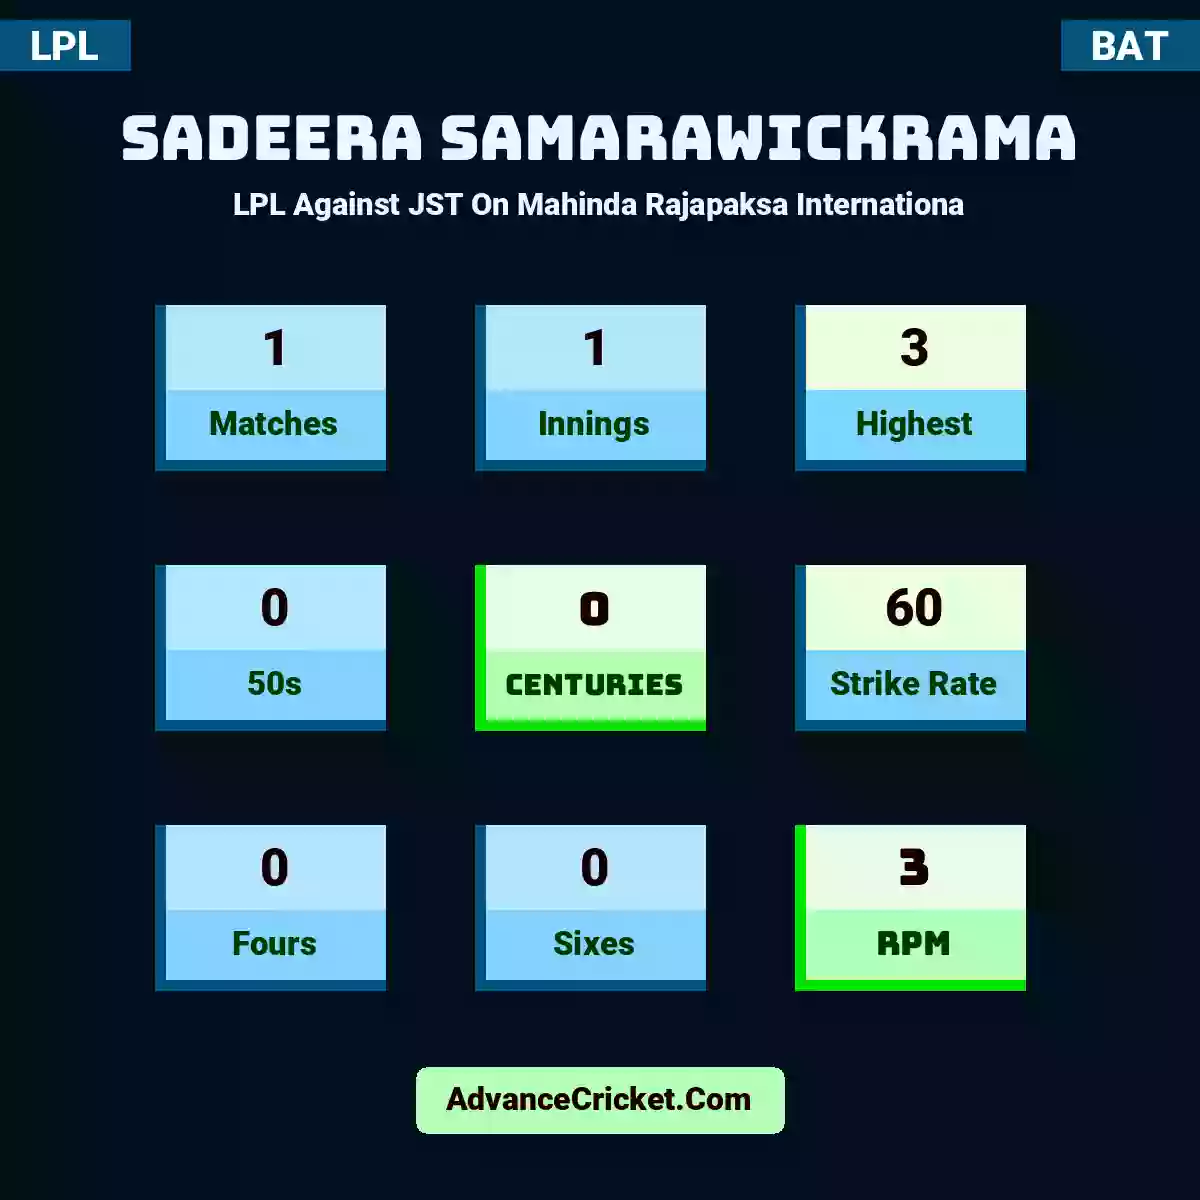 Sadeera Samarawickrama LPL  Against JST On Mahinda Rajapaksa Internationa, Sadeera Samarawickrama played 1 matches, scored 3 runs as highest, 0 half-centuries, and 0 centuries, with a strike rate of 60. S.Samarawickrama hit 0 fours and 0 sixes, with an RPM of 3.